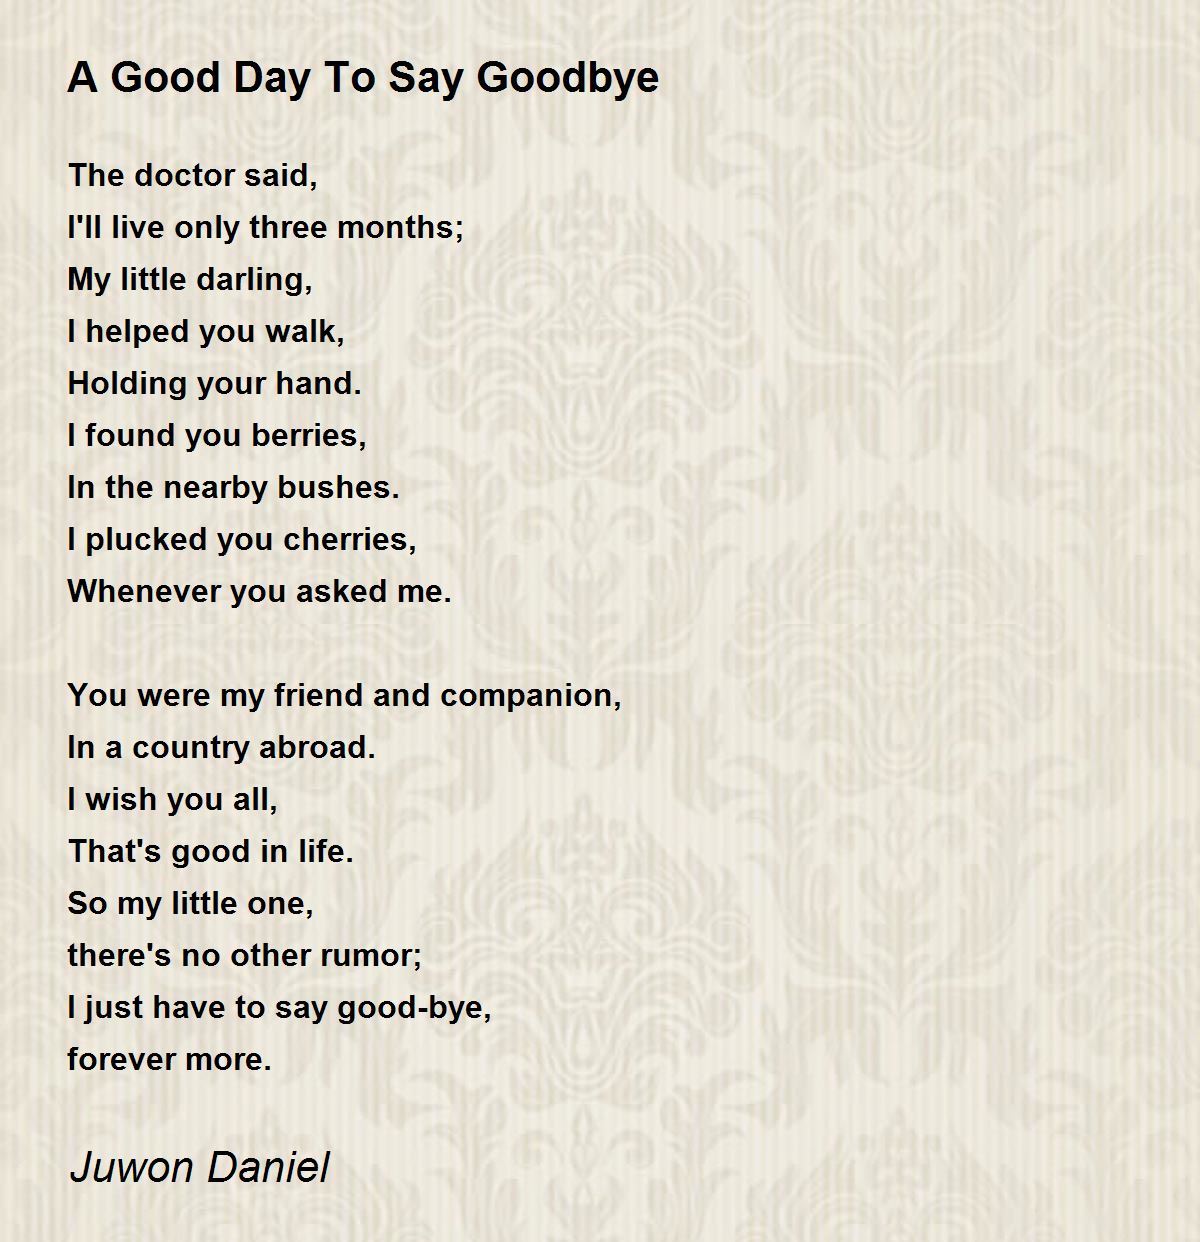 saying goodbye poems